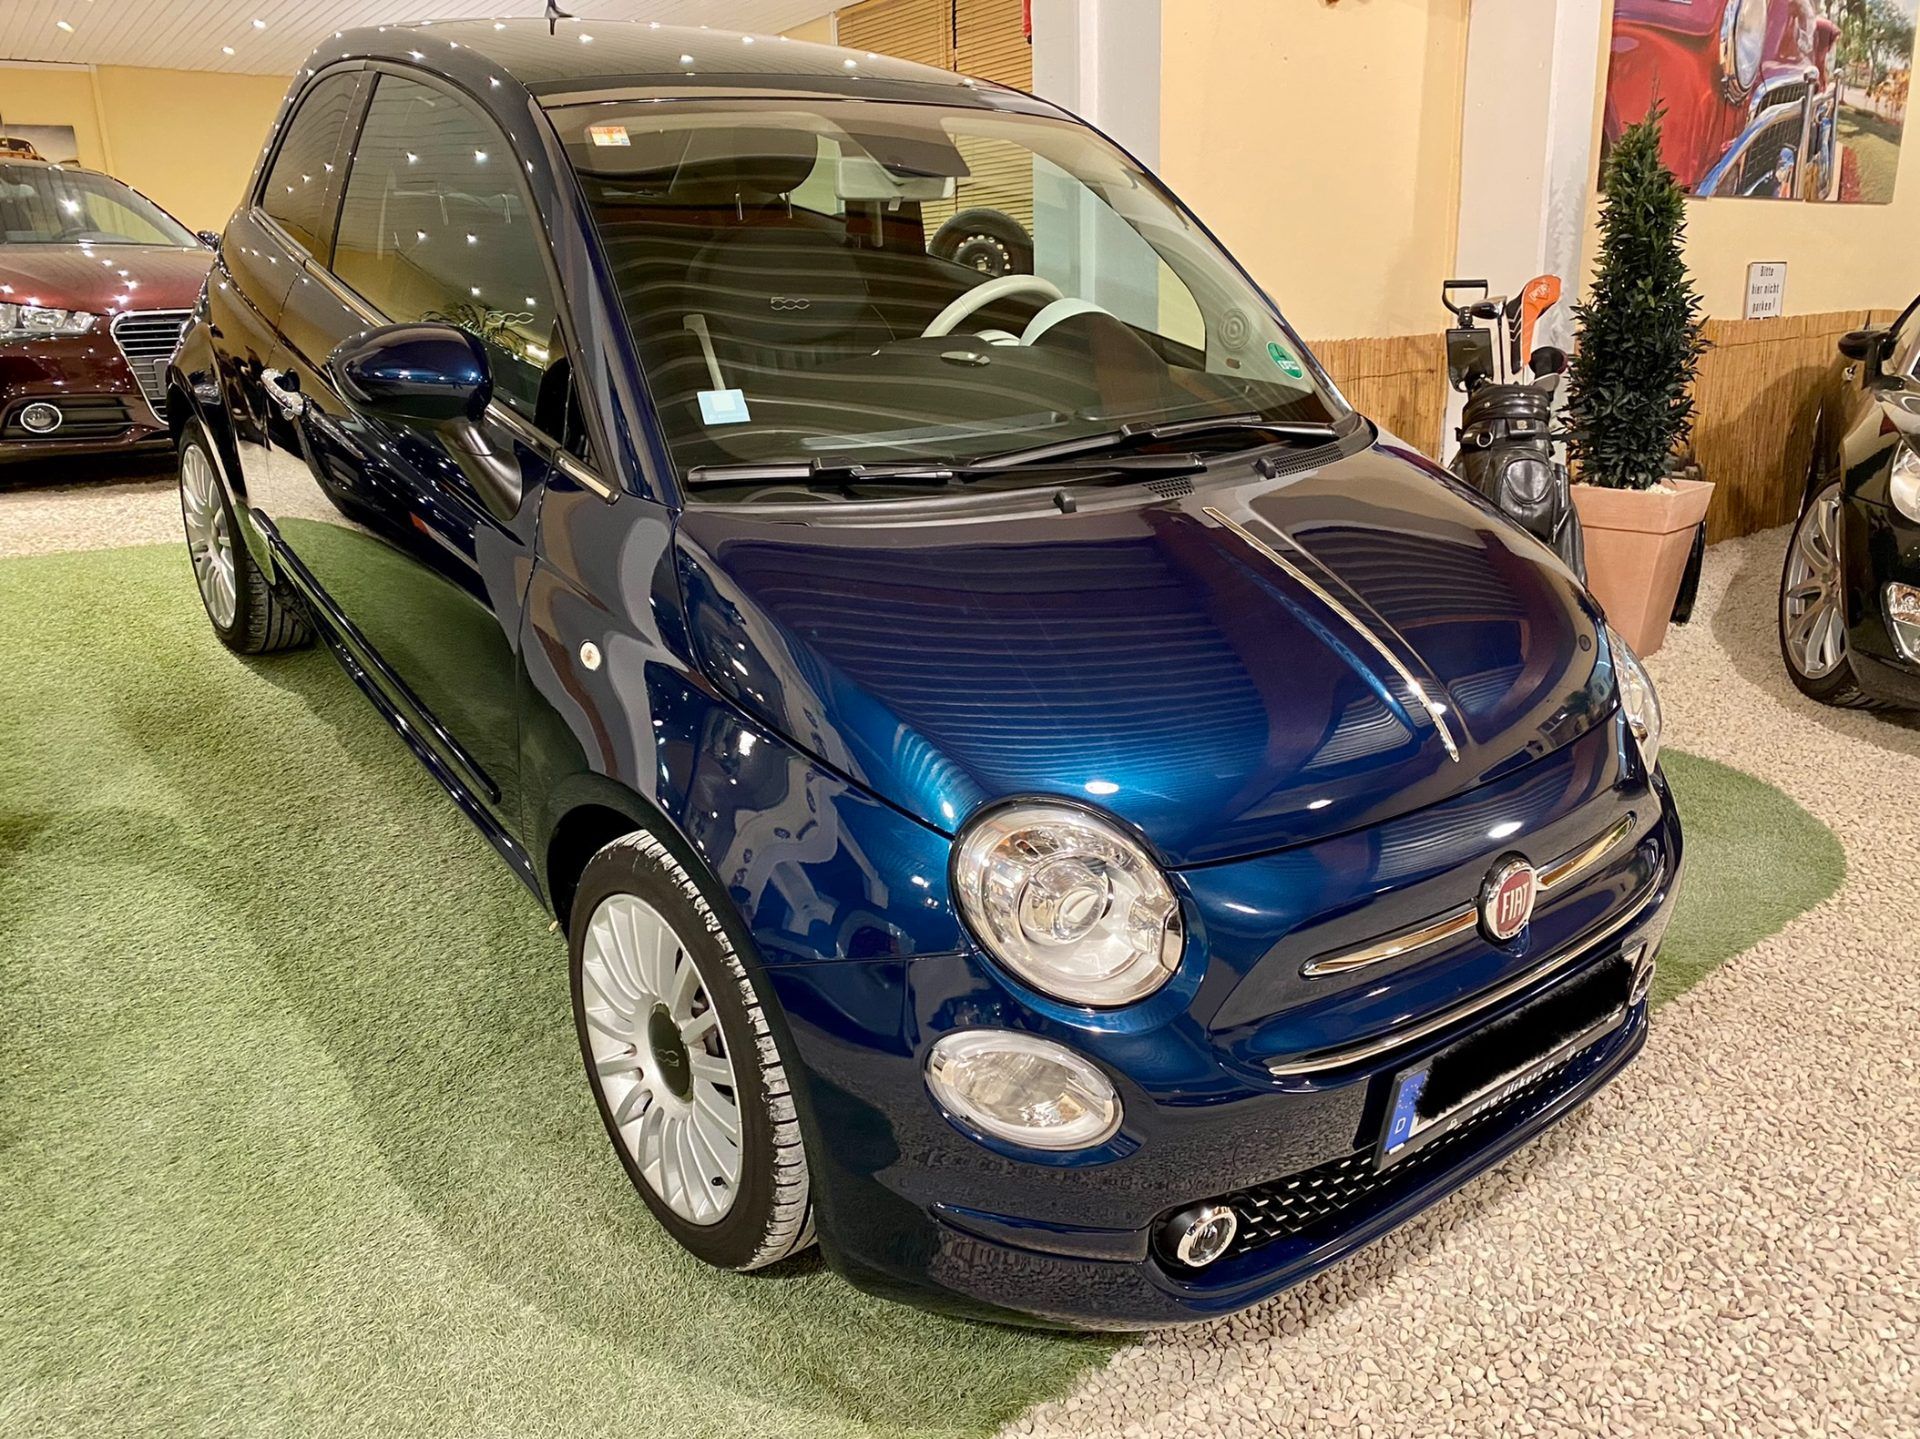 blauer Fiat bei Lopez Automobile in Wuppertal